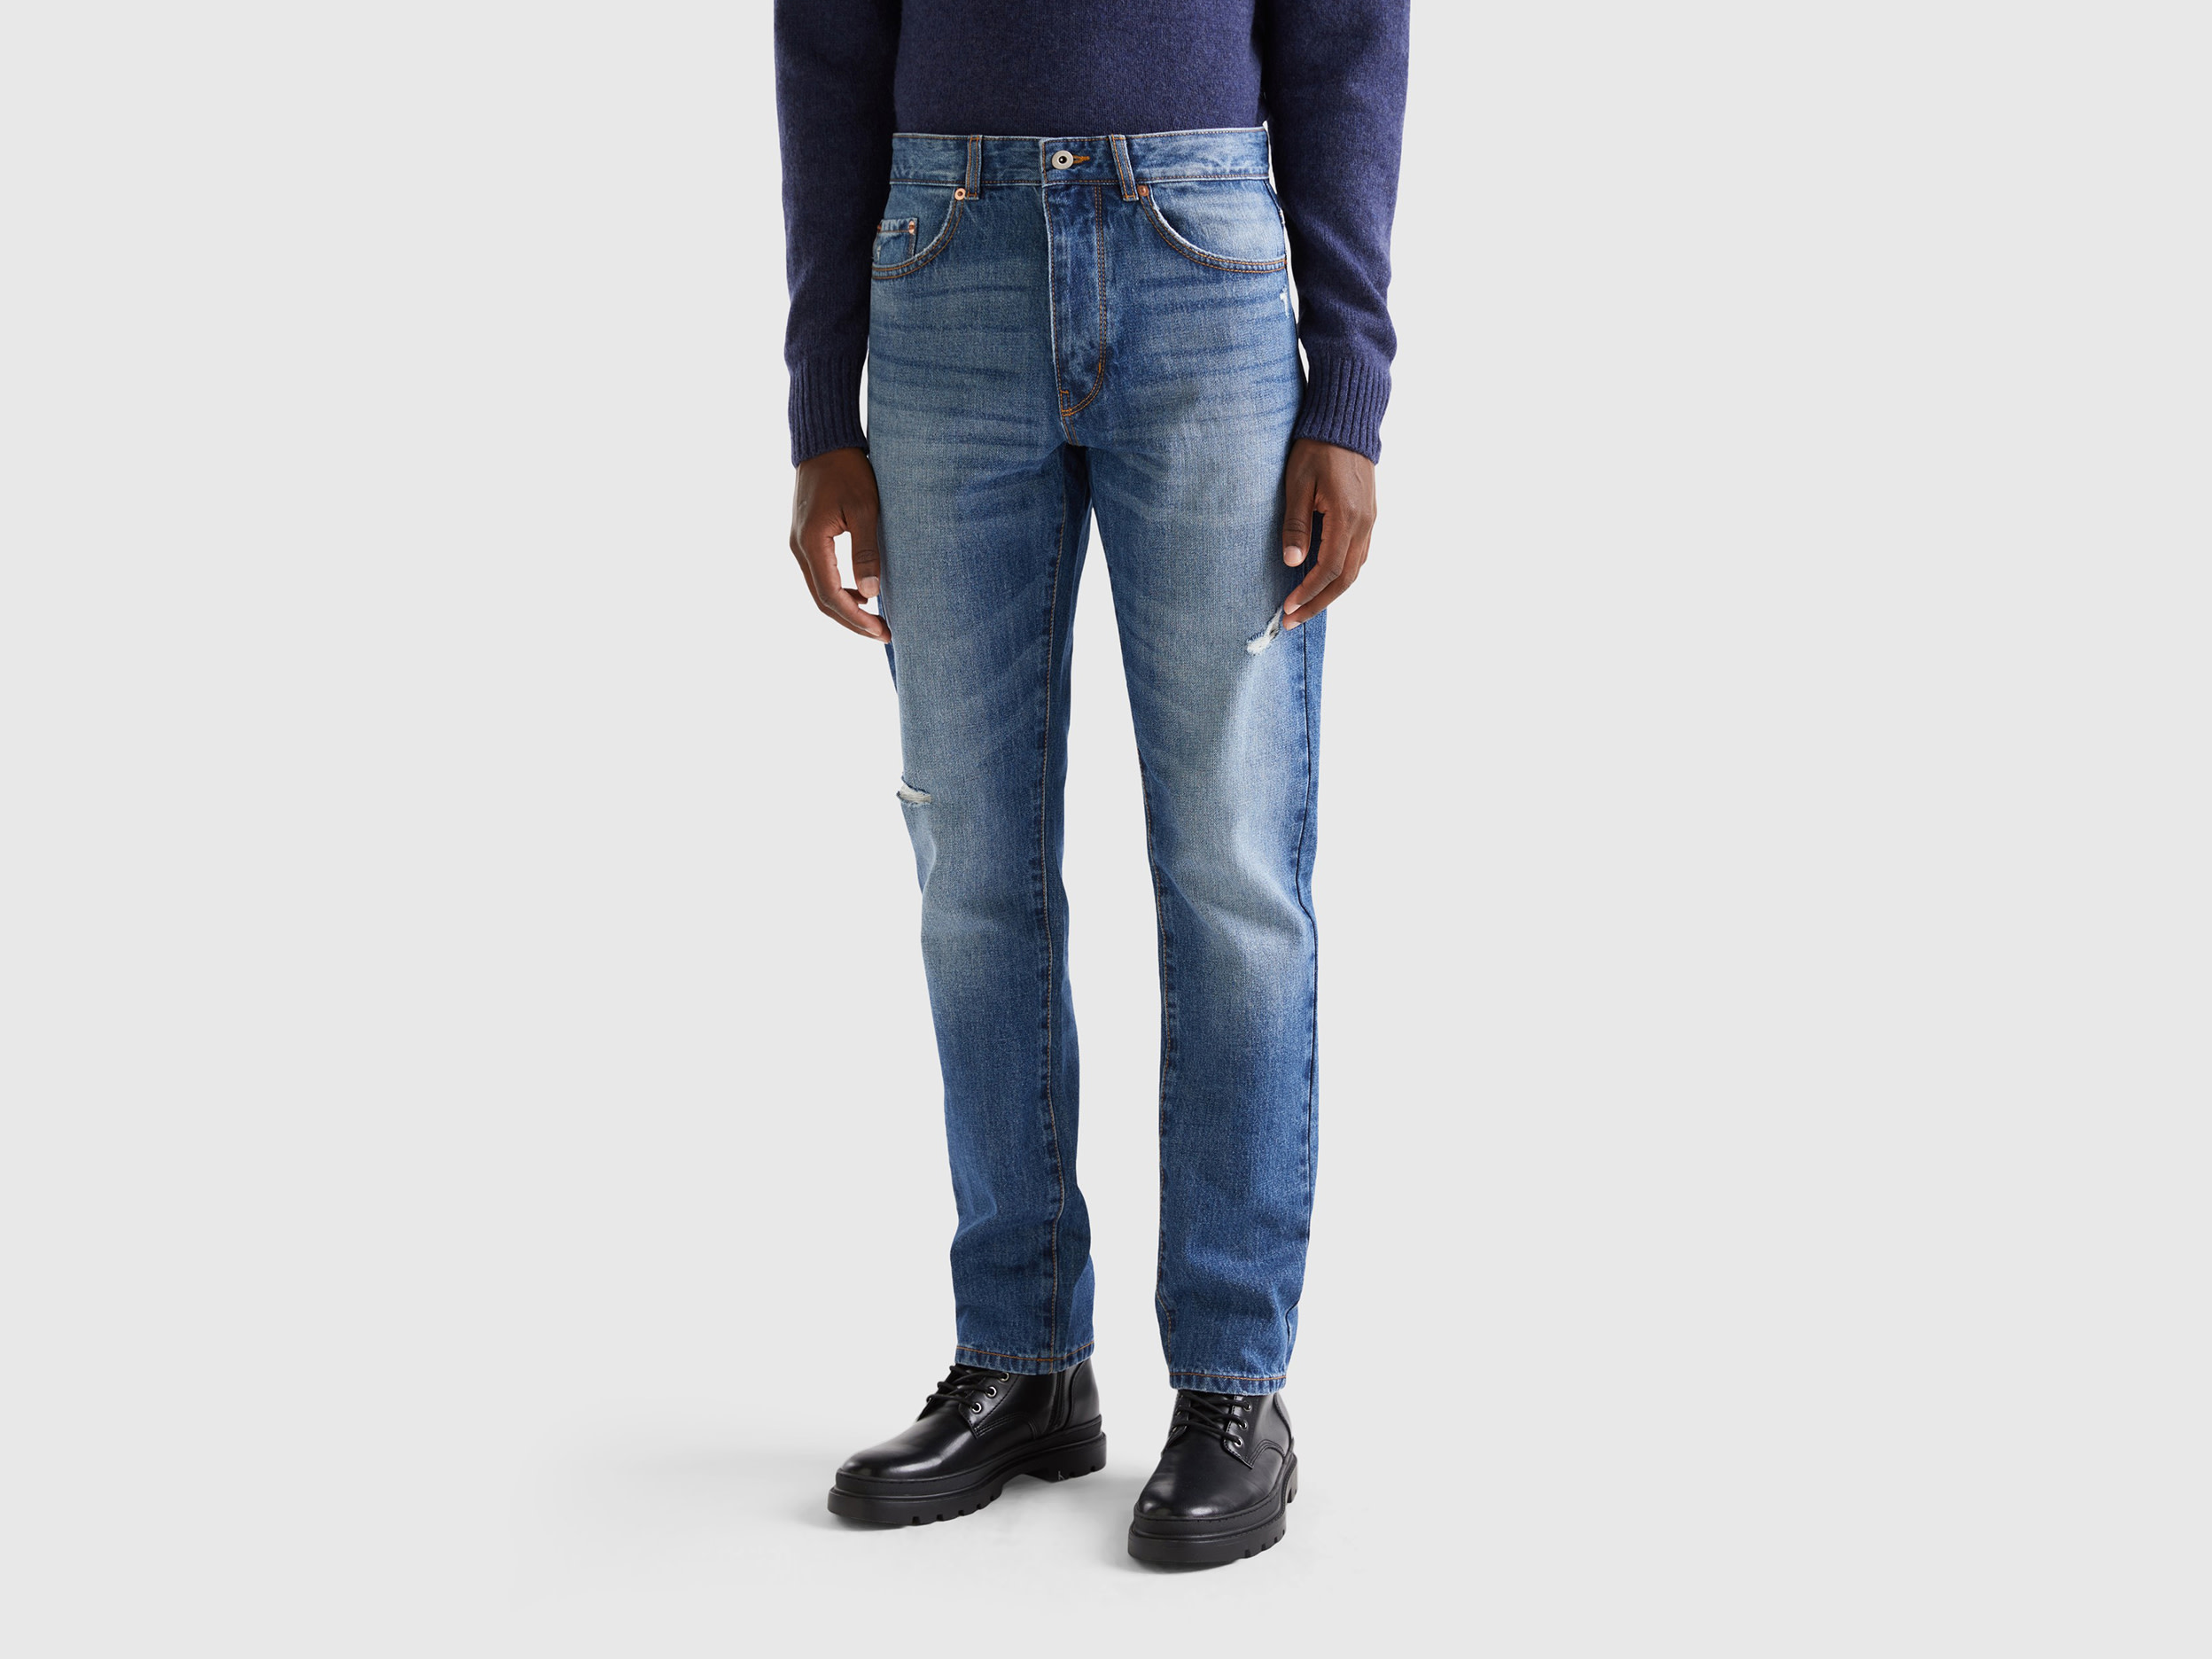 Benetton, Straight Leg Jeans With Tears, size 29, Light Blue, Men